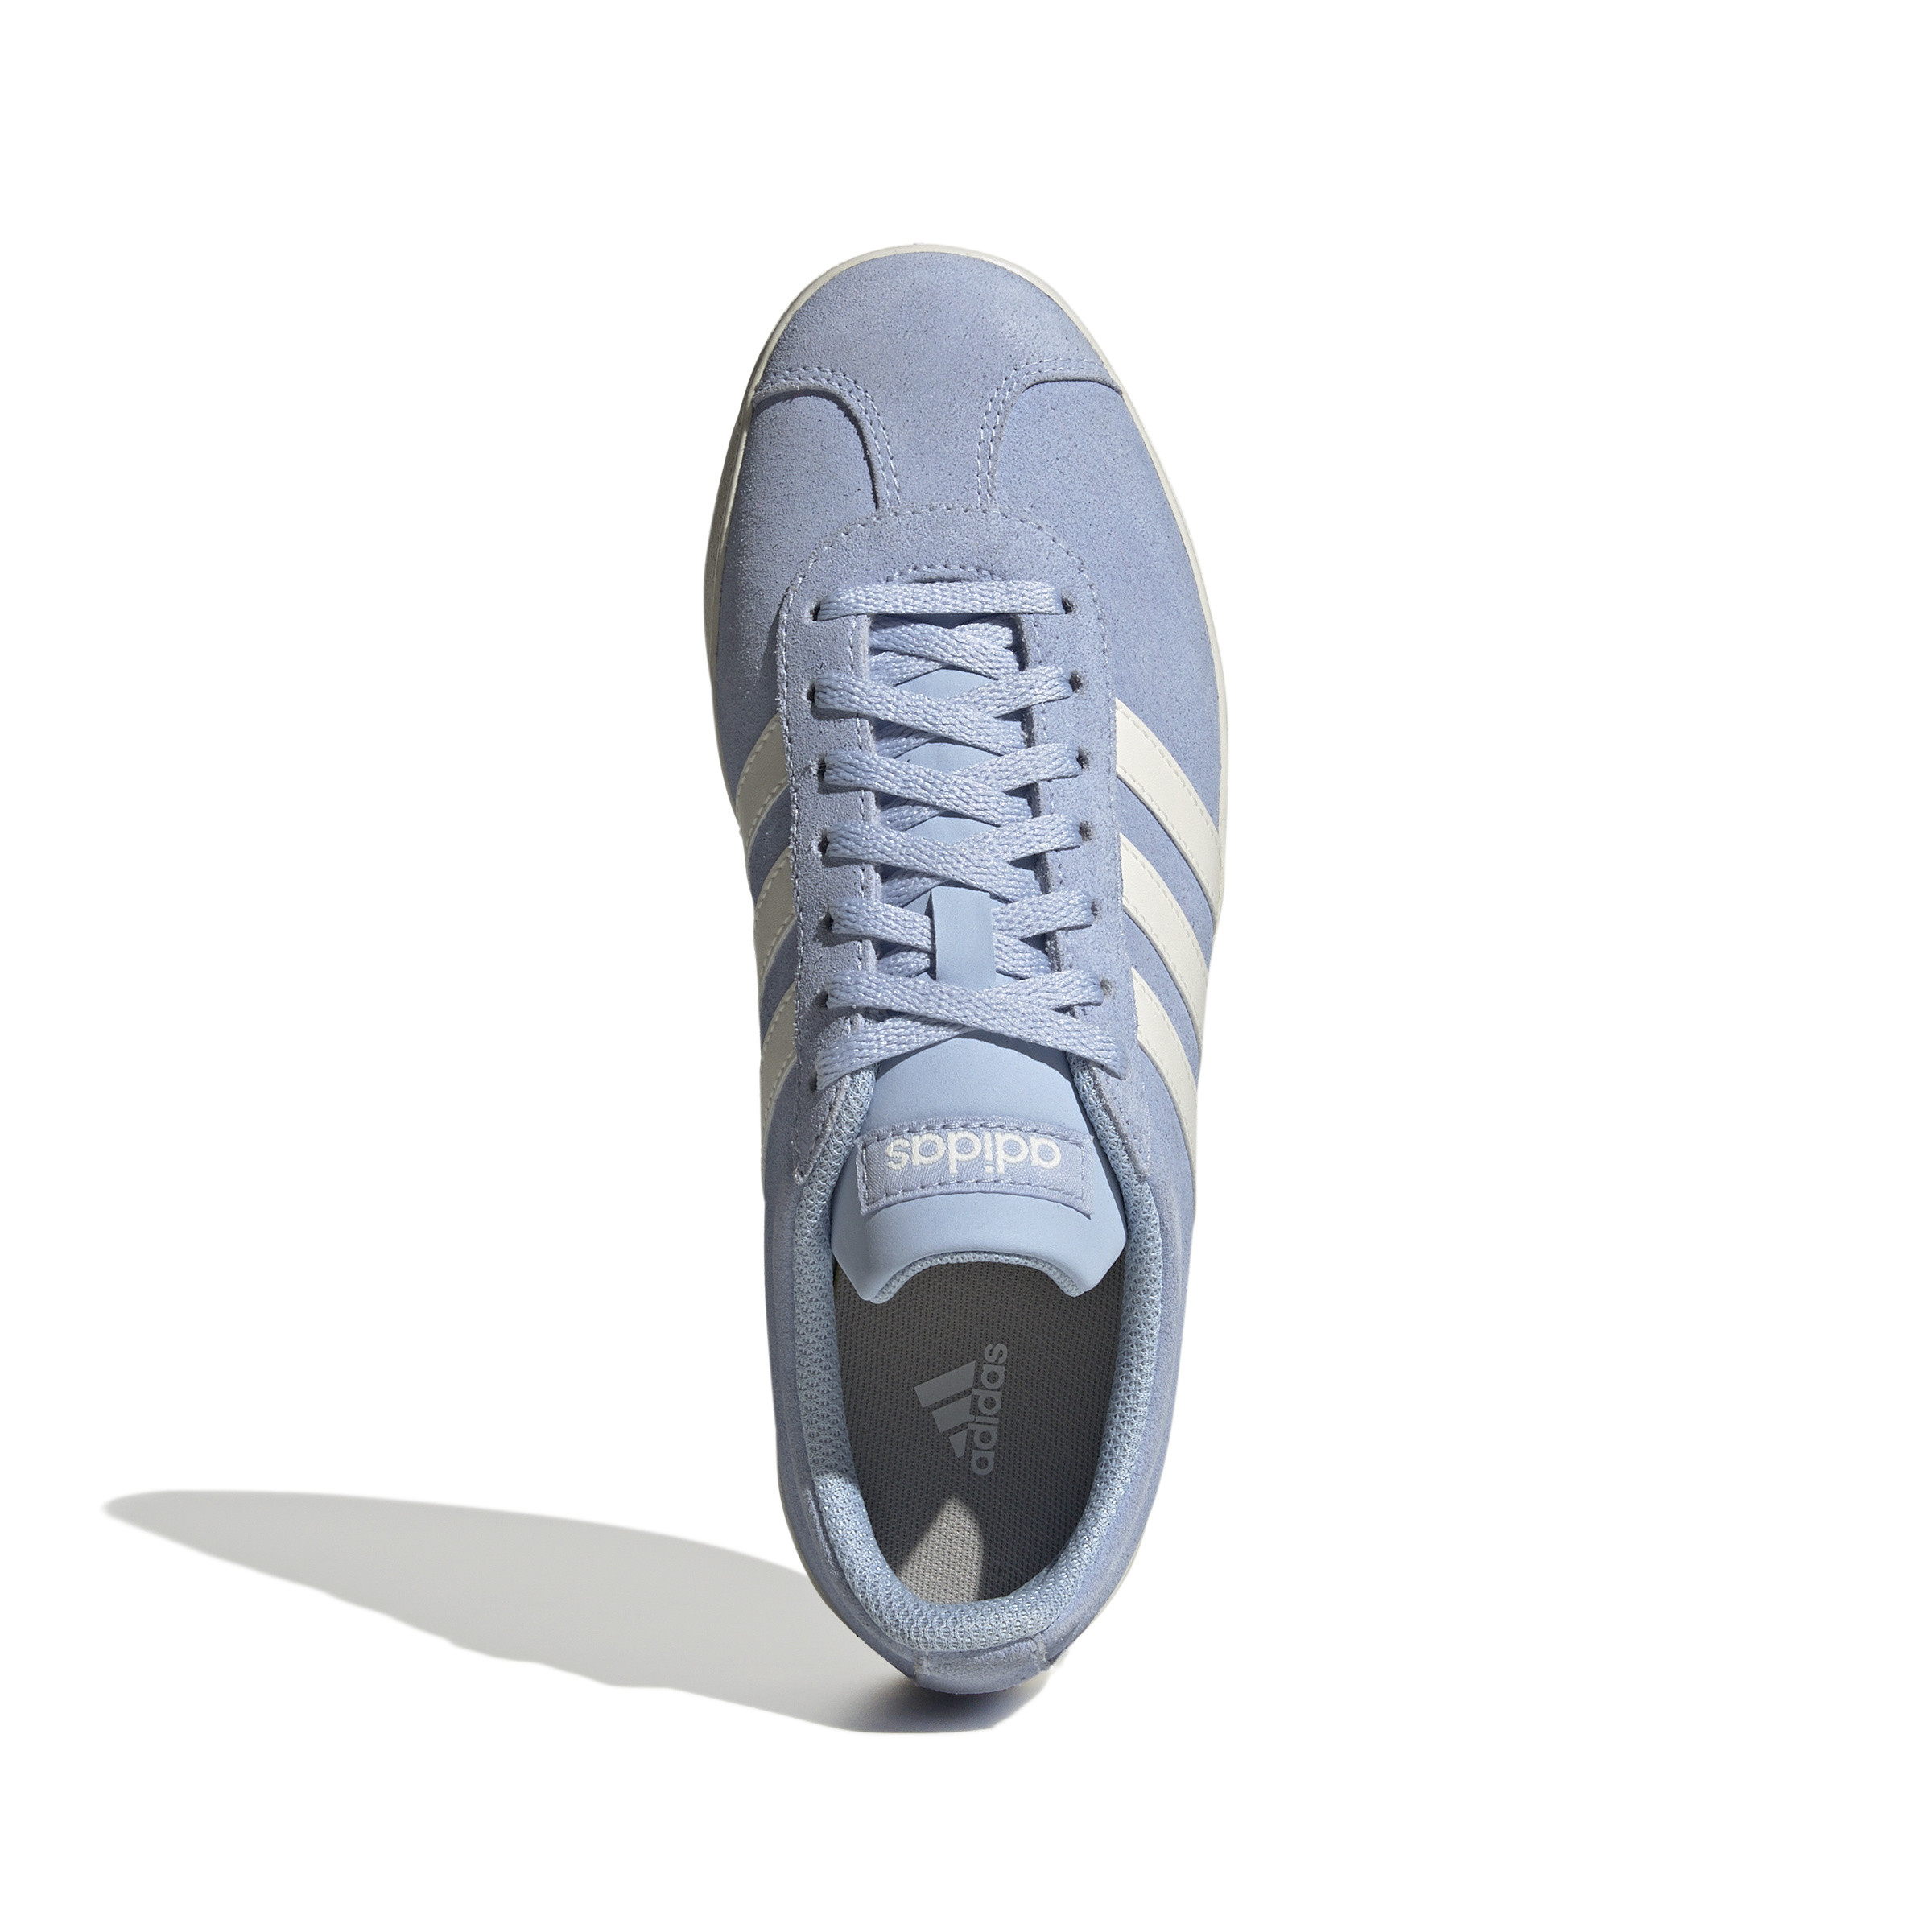 Adidas - Scarpe VL Court 2.0 Suede, Azzurro, large image number 4